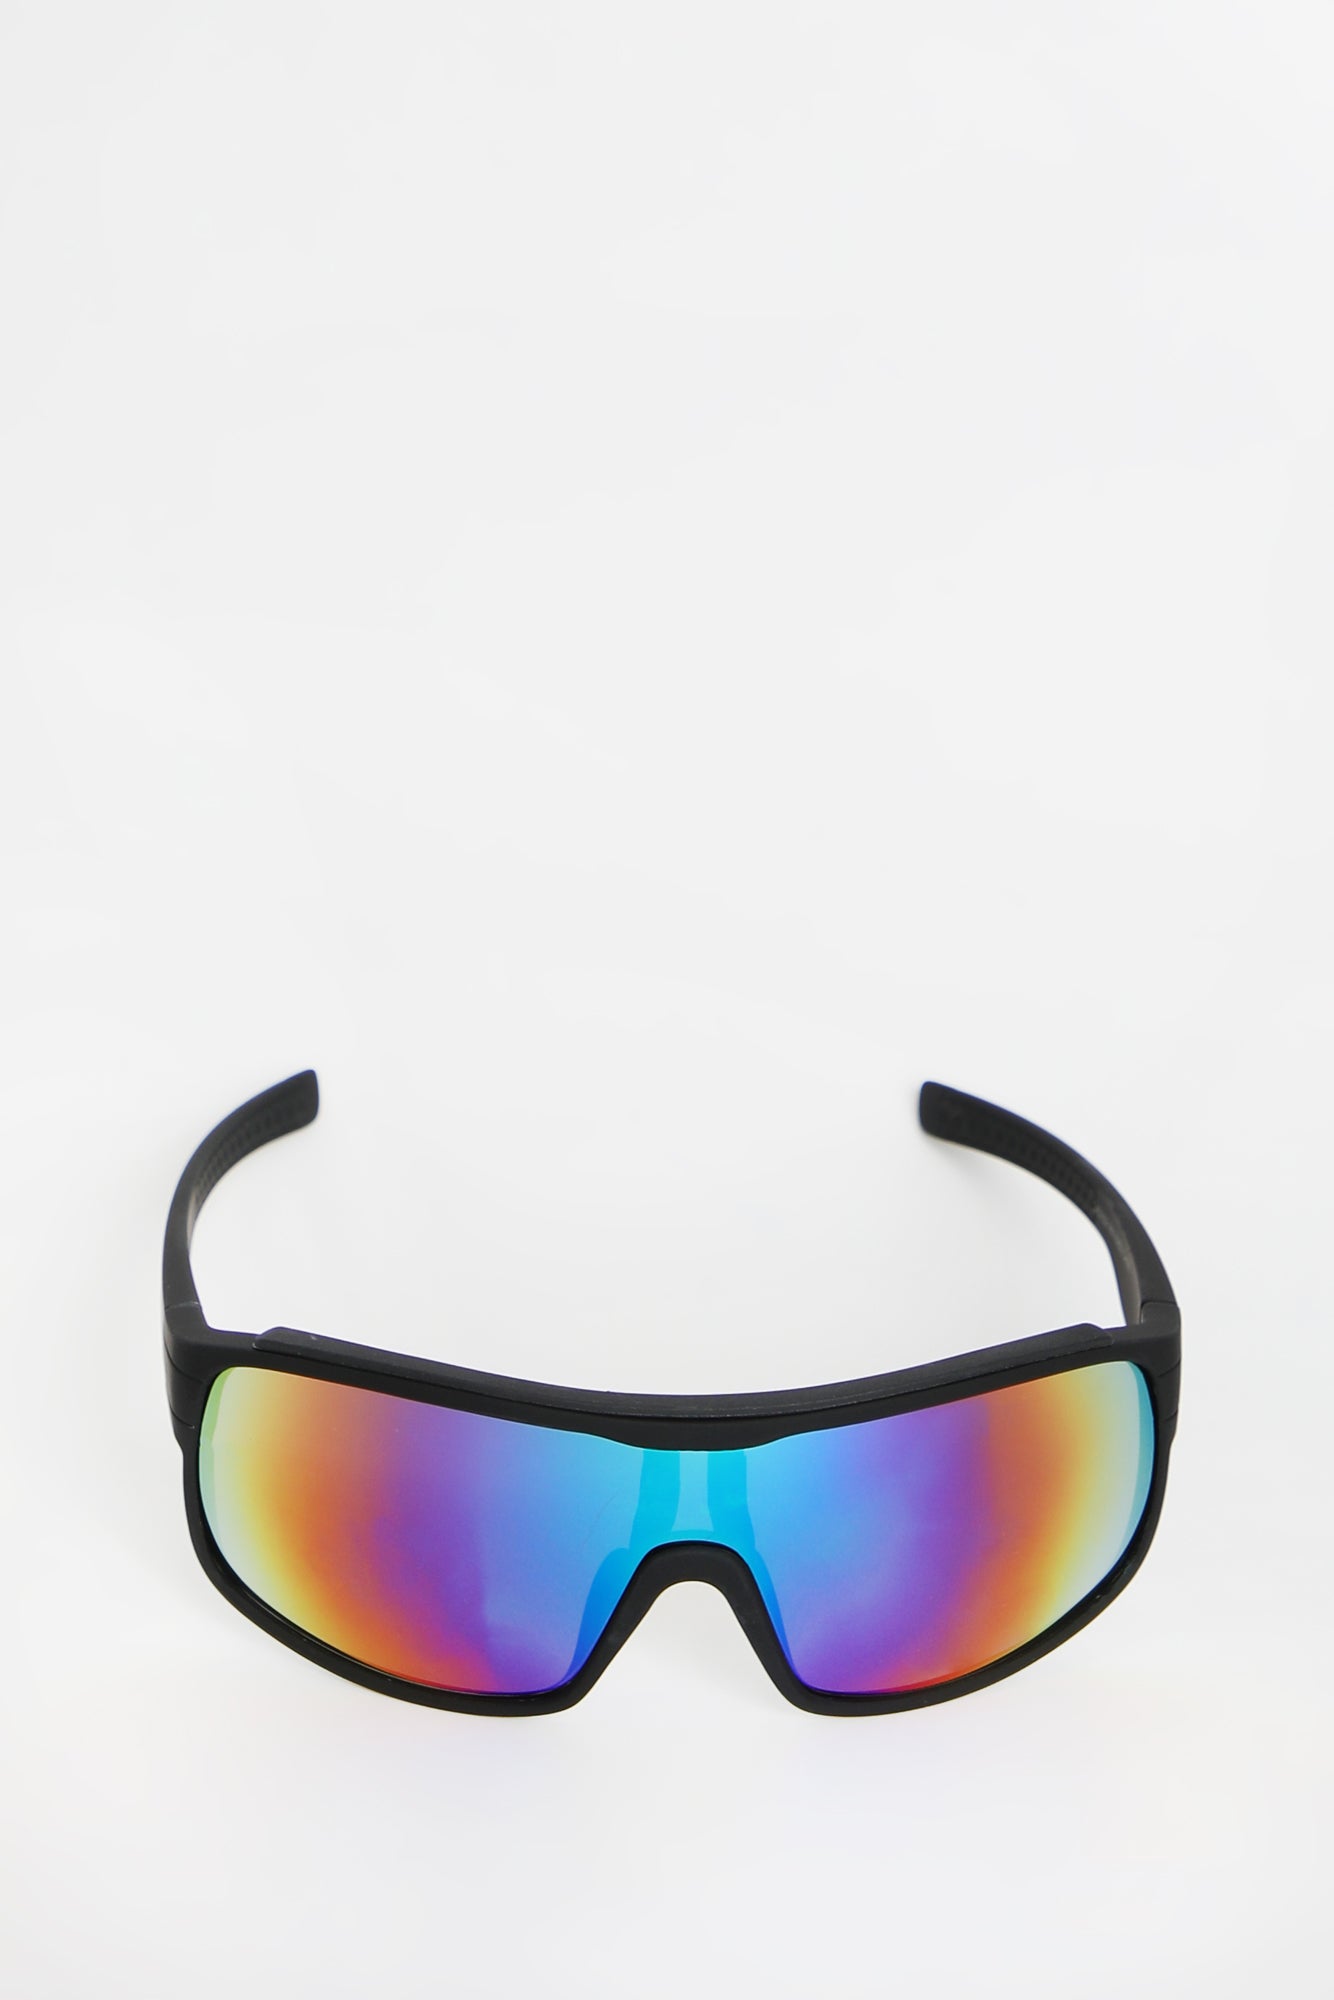 West49 Revo Shield Sunglasses - Black / O/S